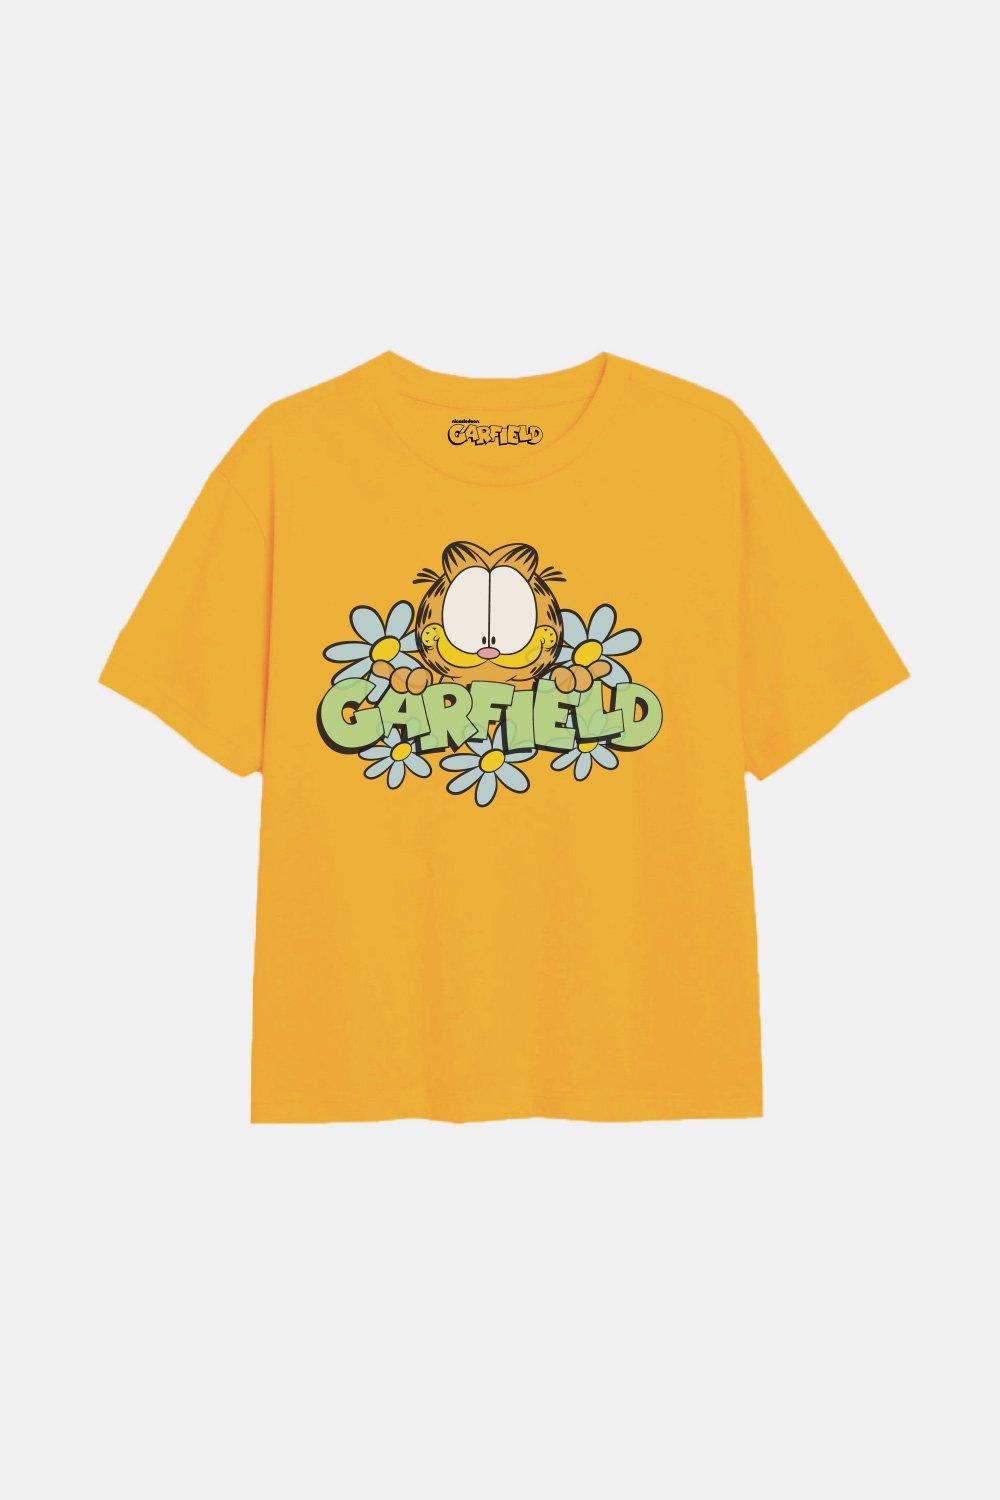 Футболка для девочек Flower Power Garfield, желтый гарфилд знаменитый кот книга по фильму